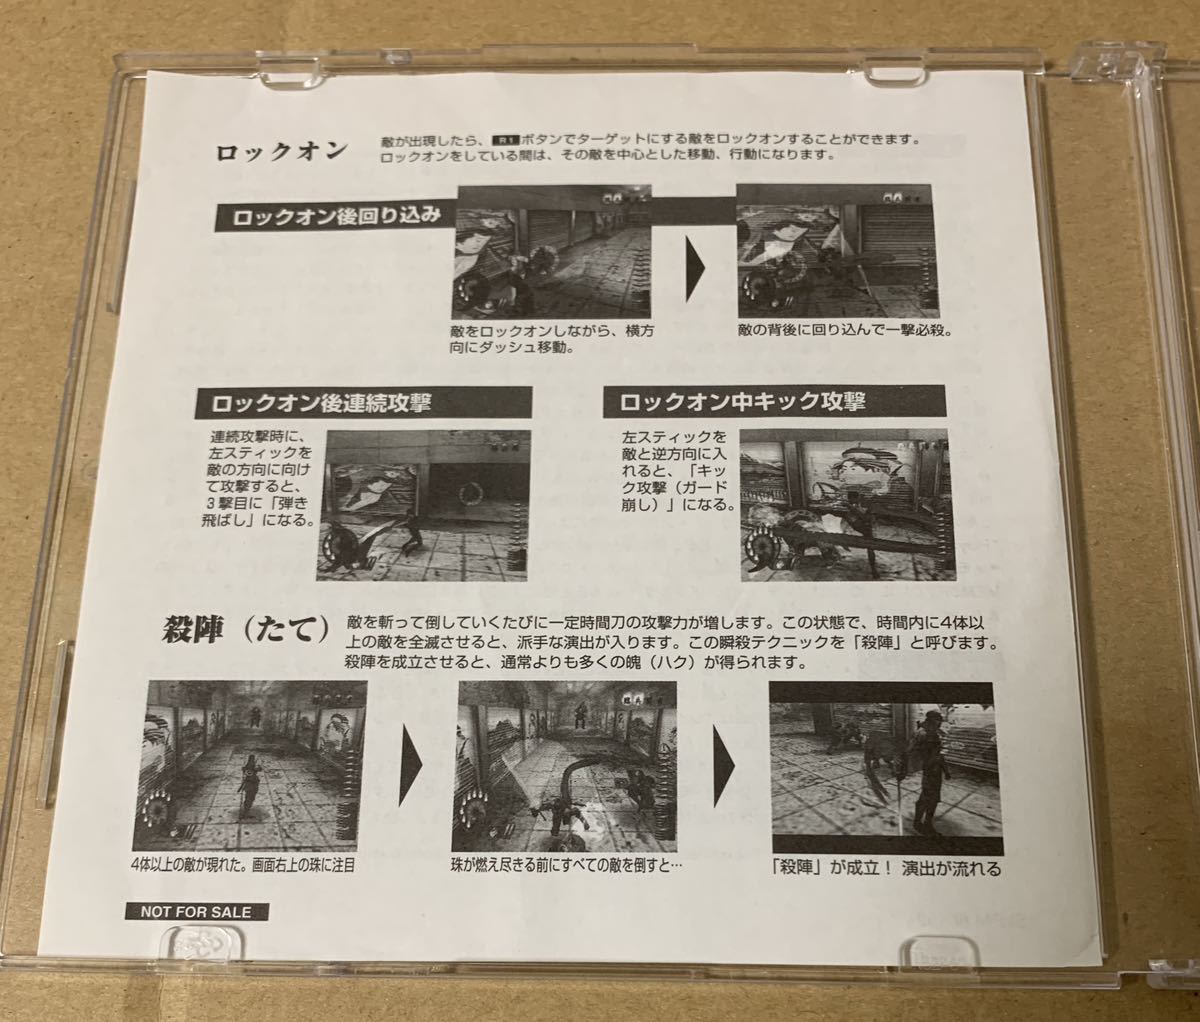 PS2 Shinobi 体験版 非売品 デモ demo not for sale 忍 SLPM 60192 セガ_画像3